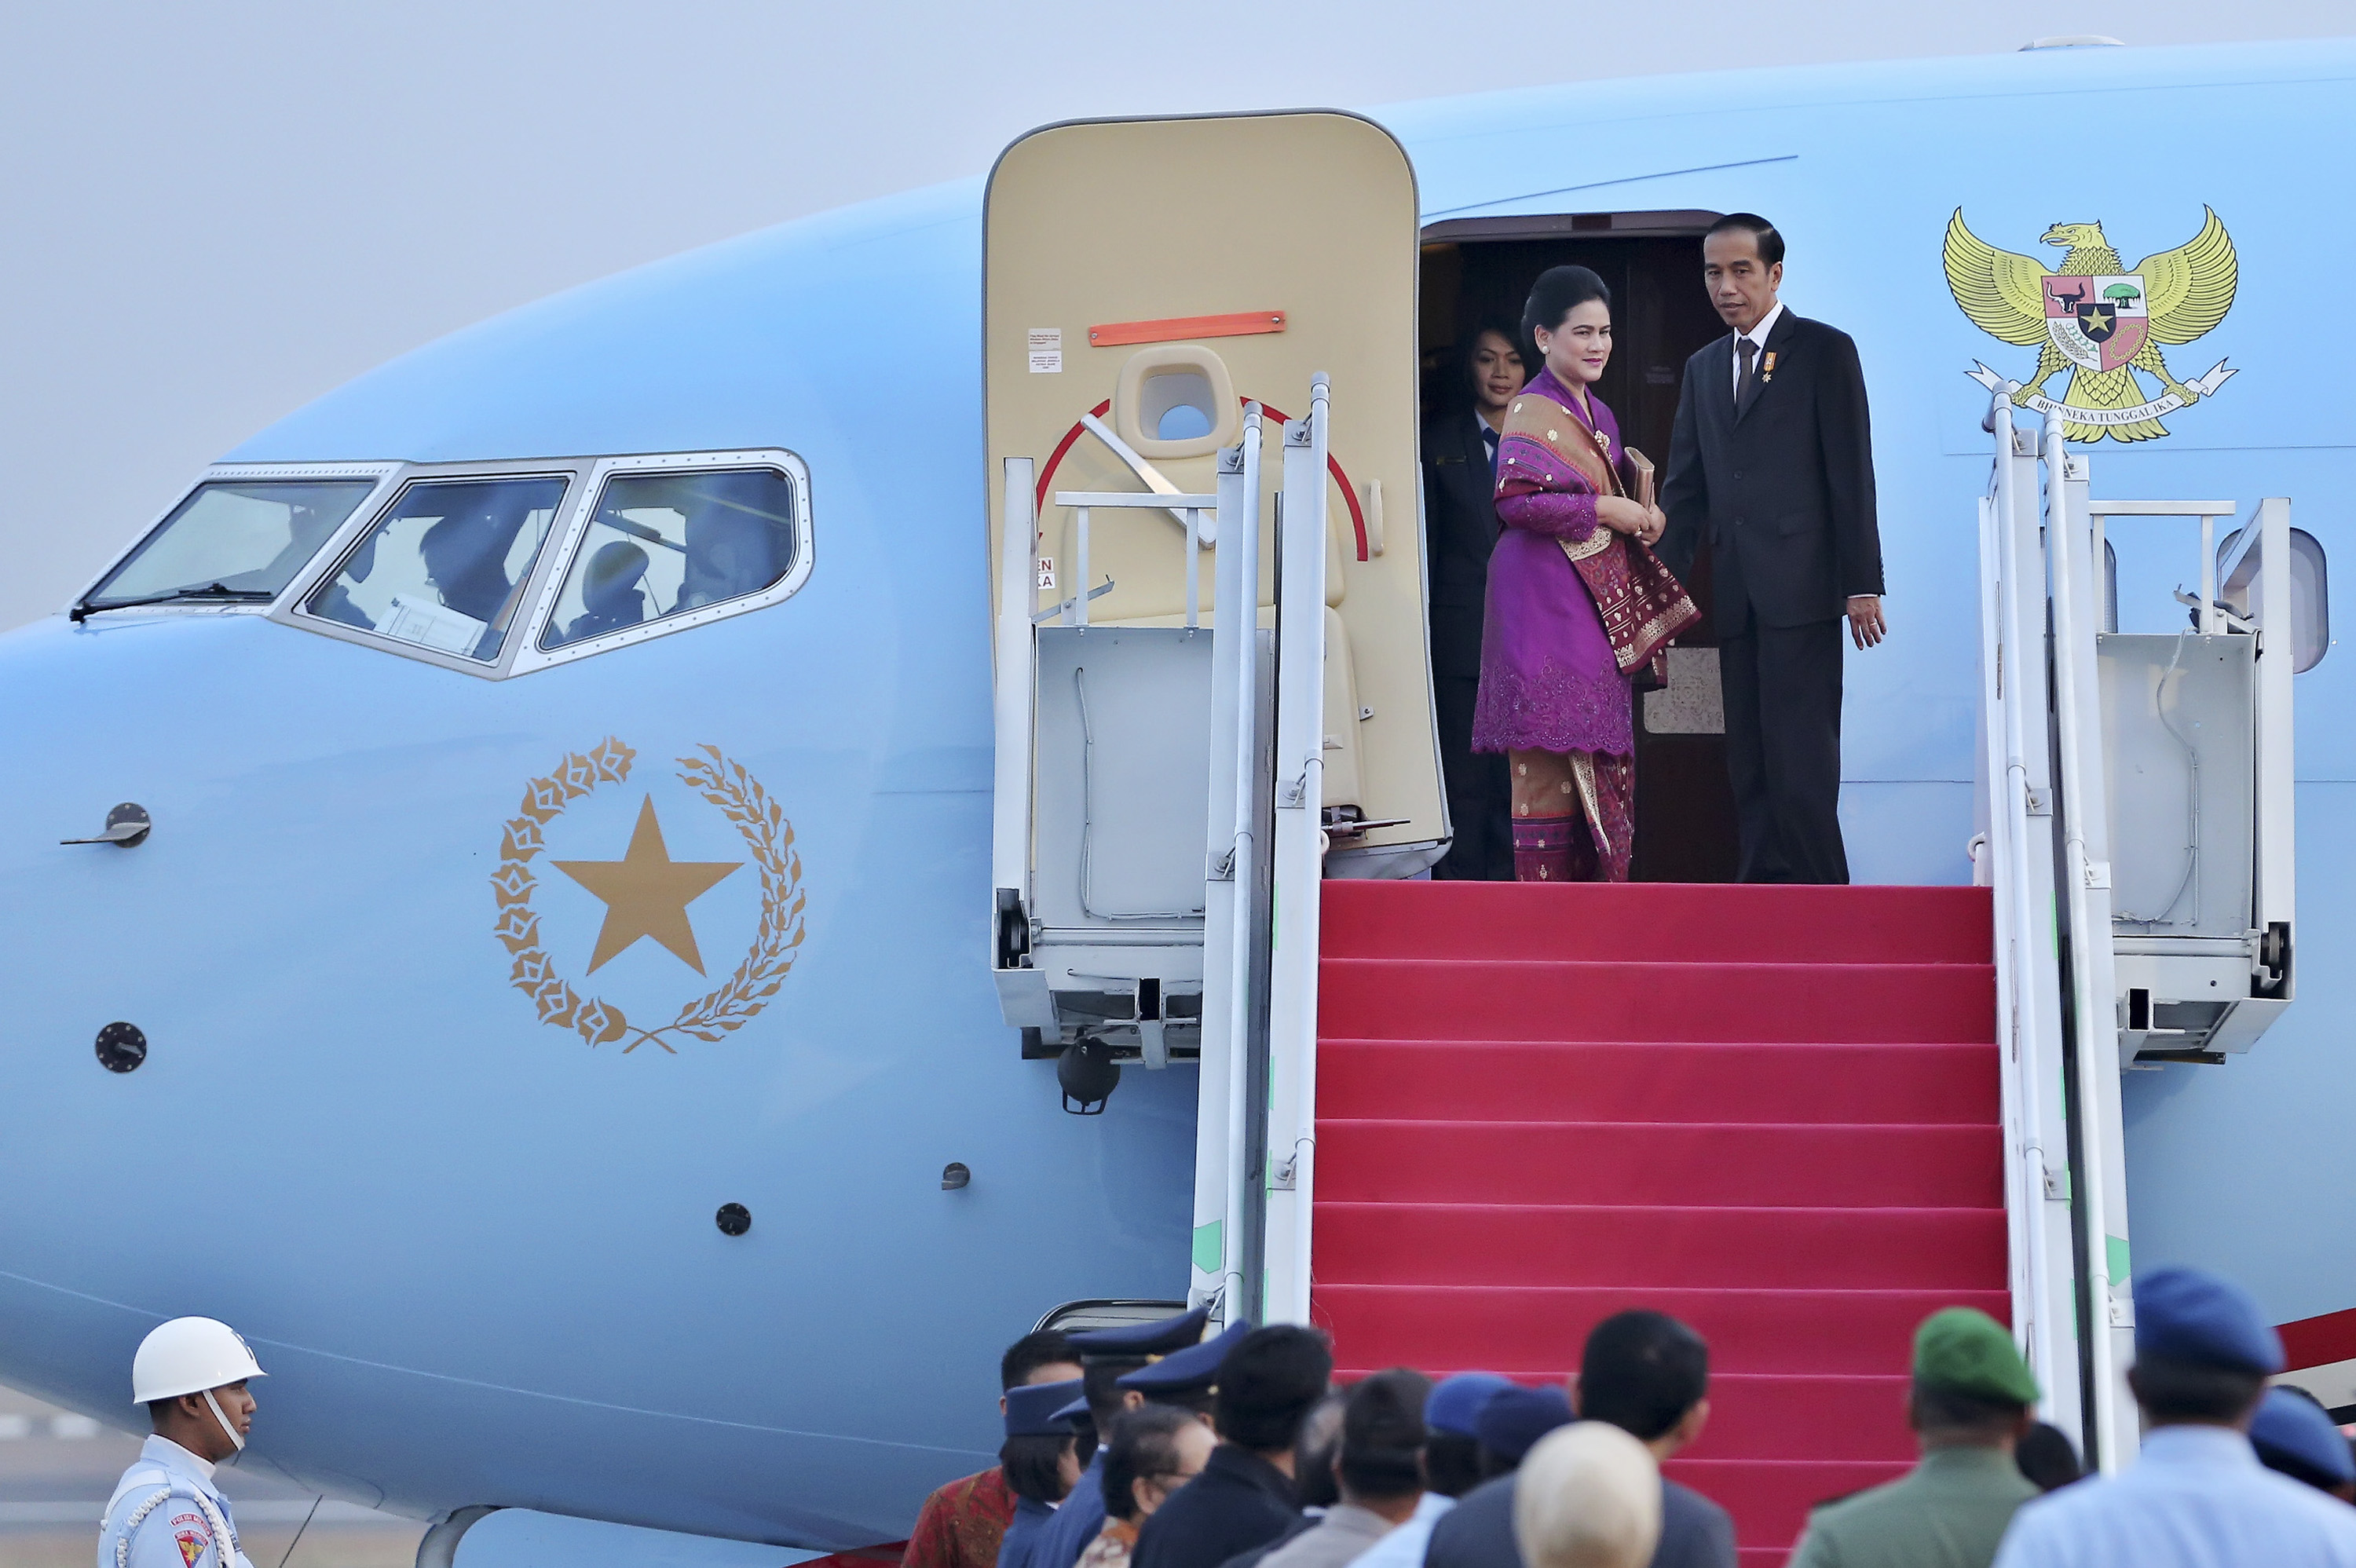 Presiden Joko Widodo (kanan) didampingi Ibu Negara Iriana Joko Widodo bersiap memasuki pesawat untuk bertolak ke Amerika Serikat di Bandara Halim Perdanakusuma, Jakarta, Sabtu (24/10). Presiden Jokowi dijadwalkan akan bertemu dengan Presiden AS Barack Obama, kemudian menyaksikan sejumlah penandatanganan kerja sama antara pengusaha Indonesia - AS, serta mengunjungi sejumlah pusat teknologi informasi. ANTARA FOTO/Yudhi Mahatma/foc/15.